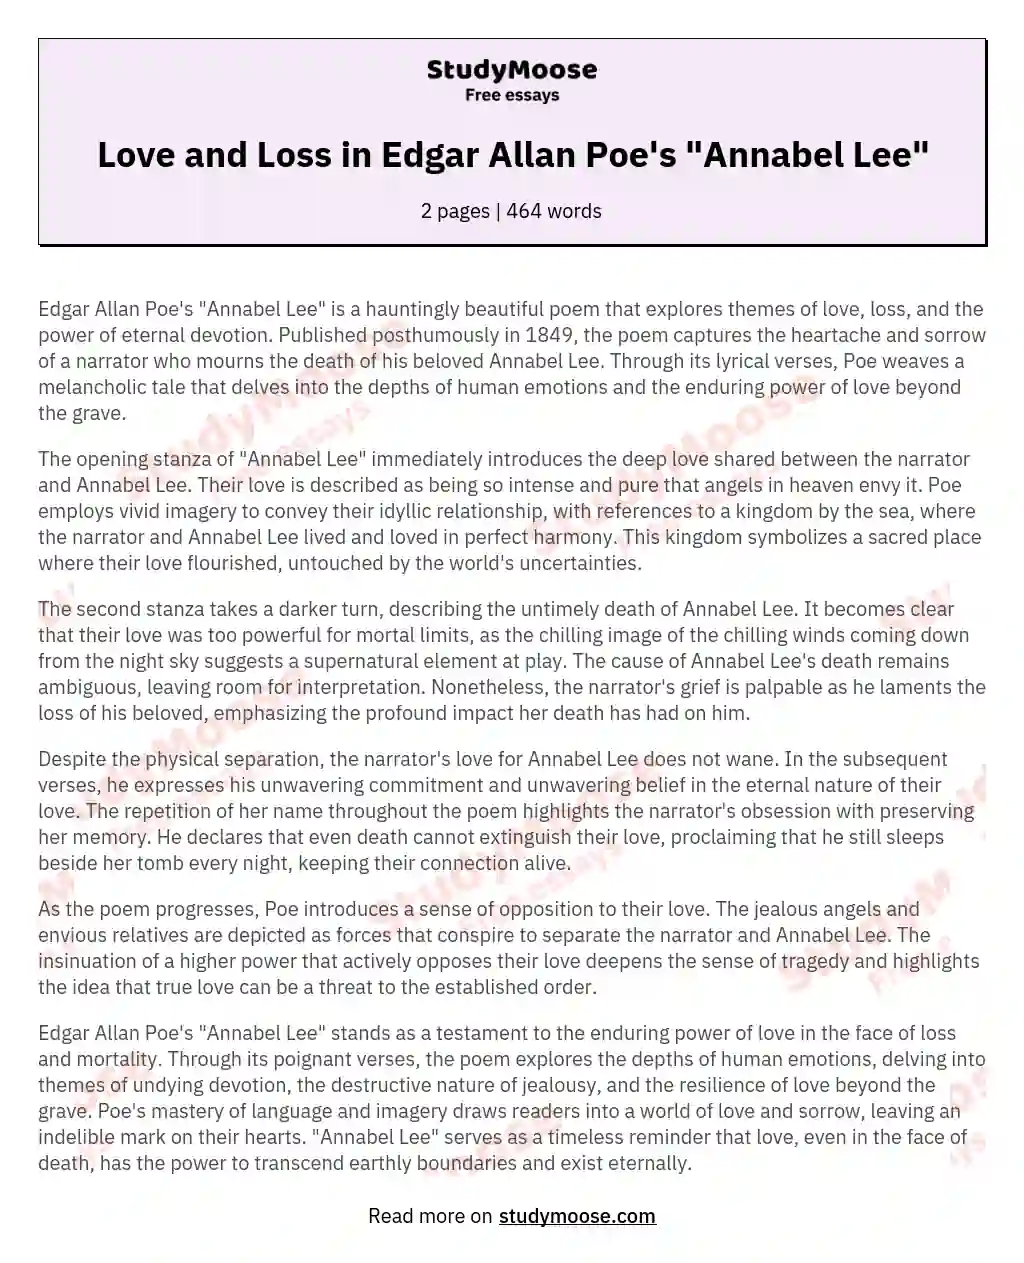 Love and Loss in Edgar Allan Poe's "Annabel Lee" essay